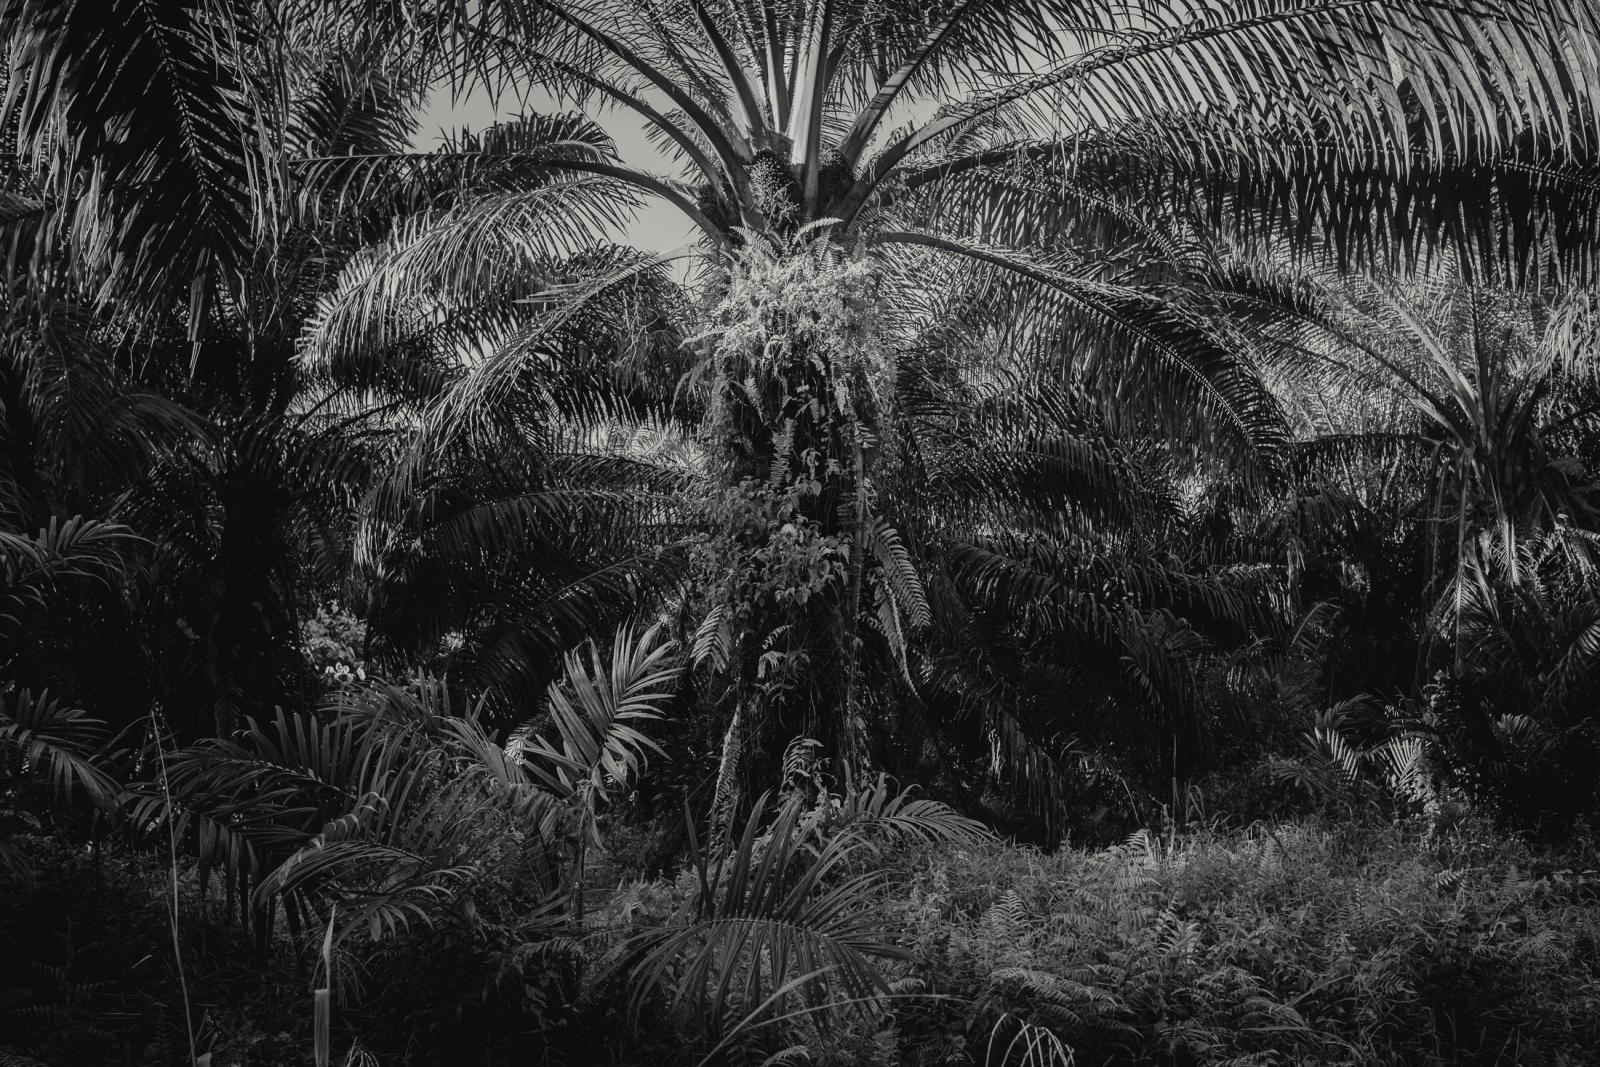  An Oil Palm Plantation in Borneo, Malaysia. 